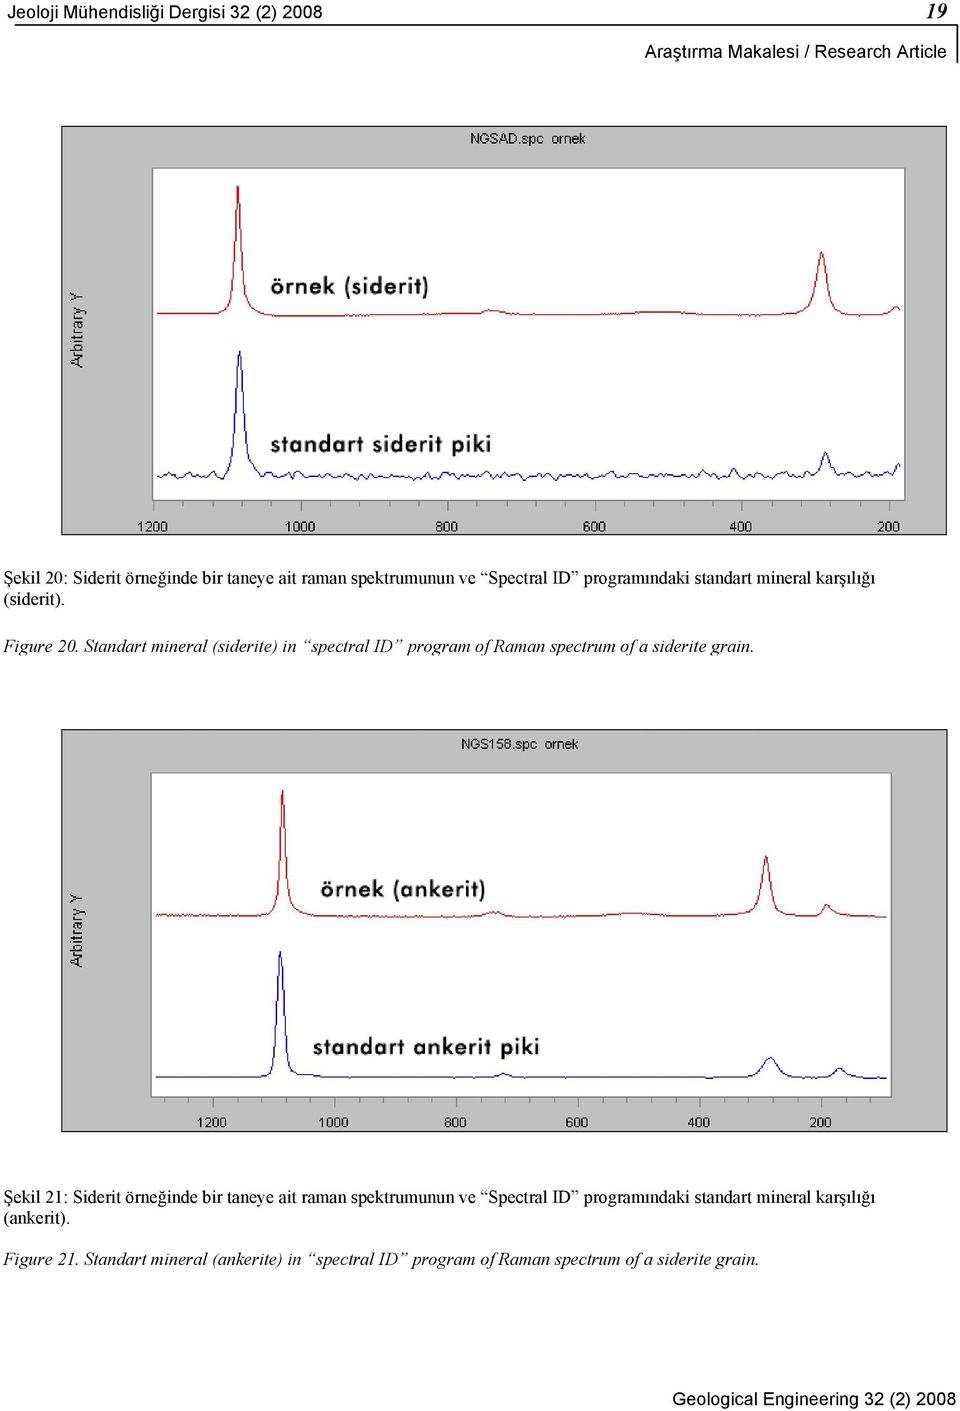 Standart mineral (siderite) in spectral ID program of Raman spectrum of a siderite grain.